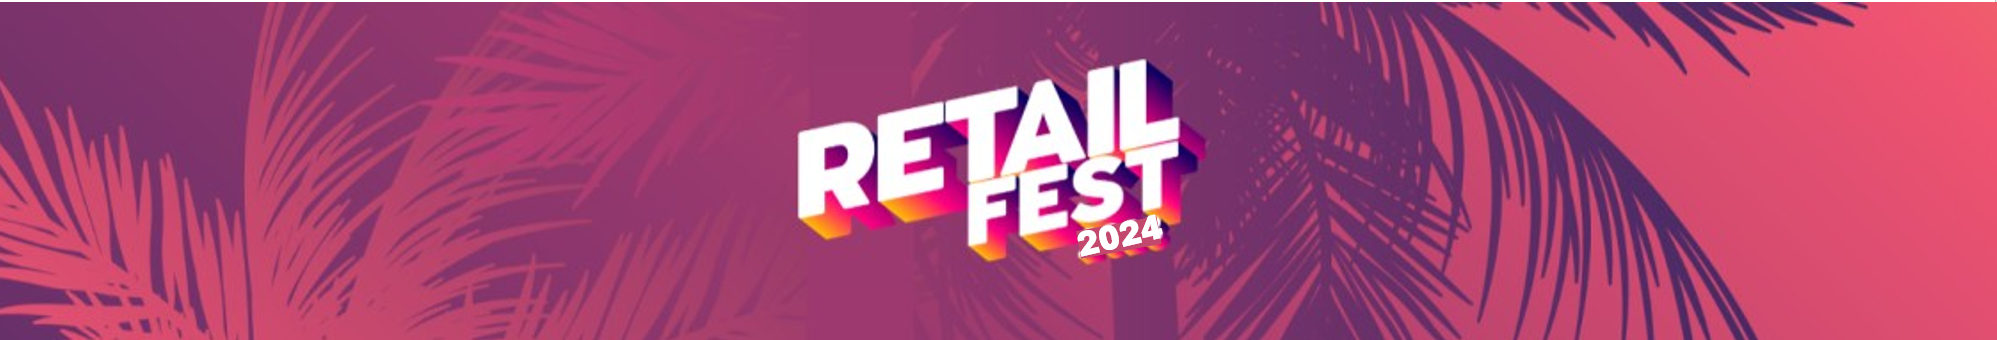 Retail Fest 2024 banner